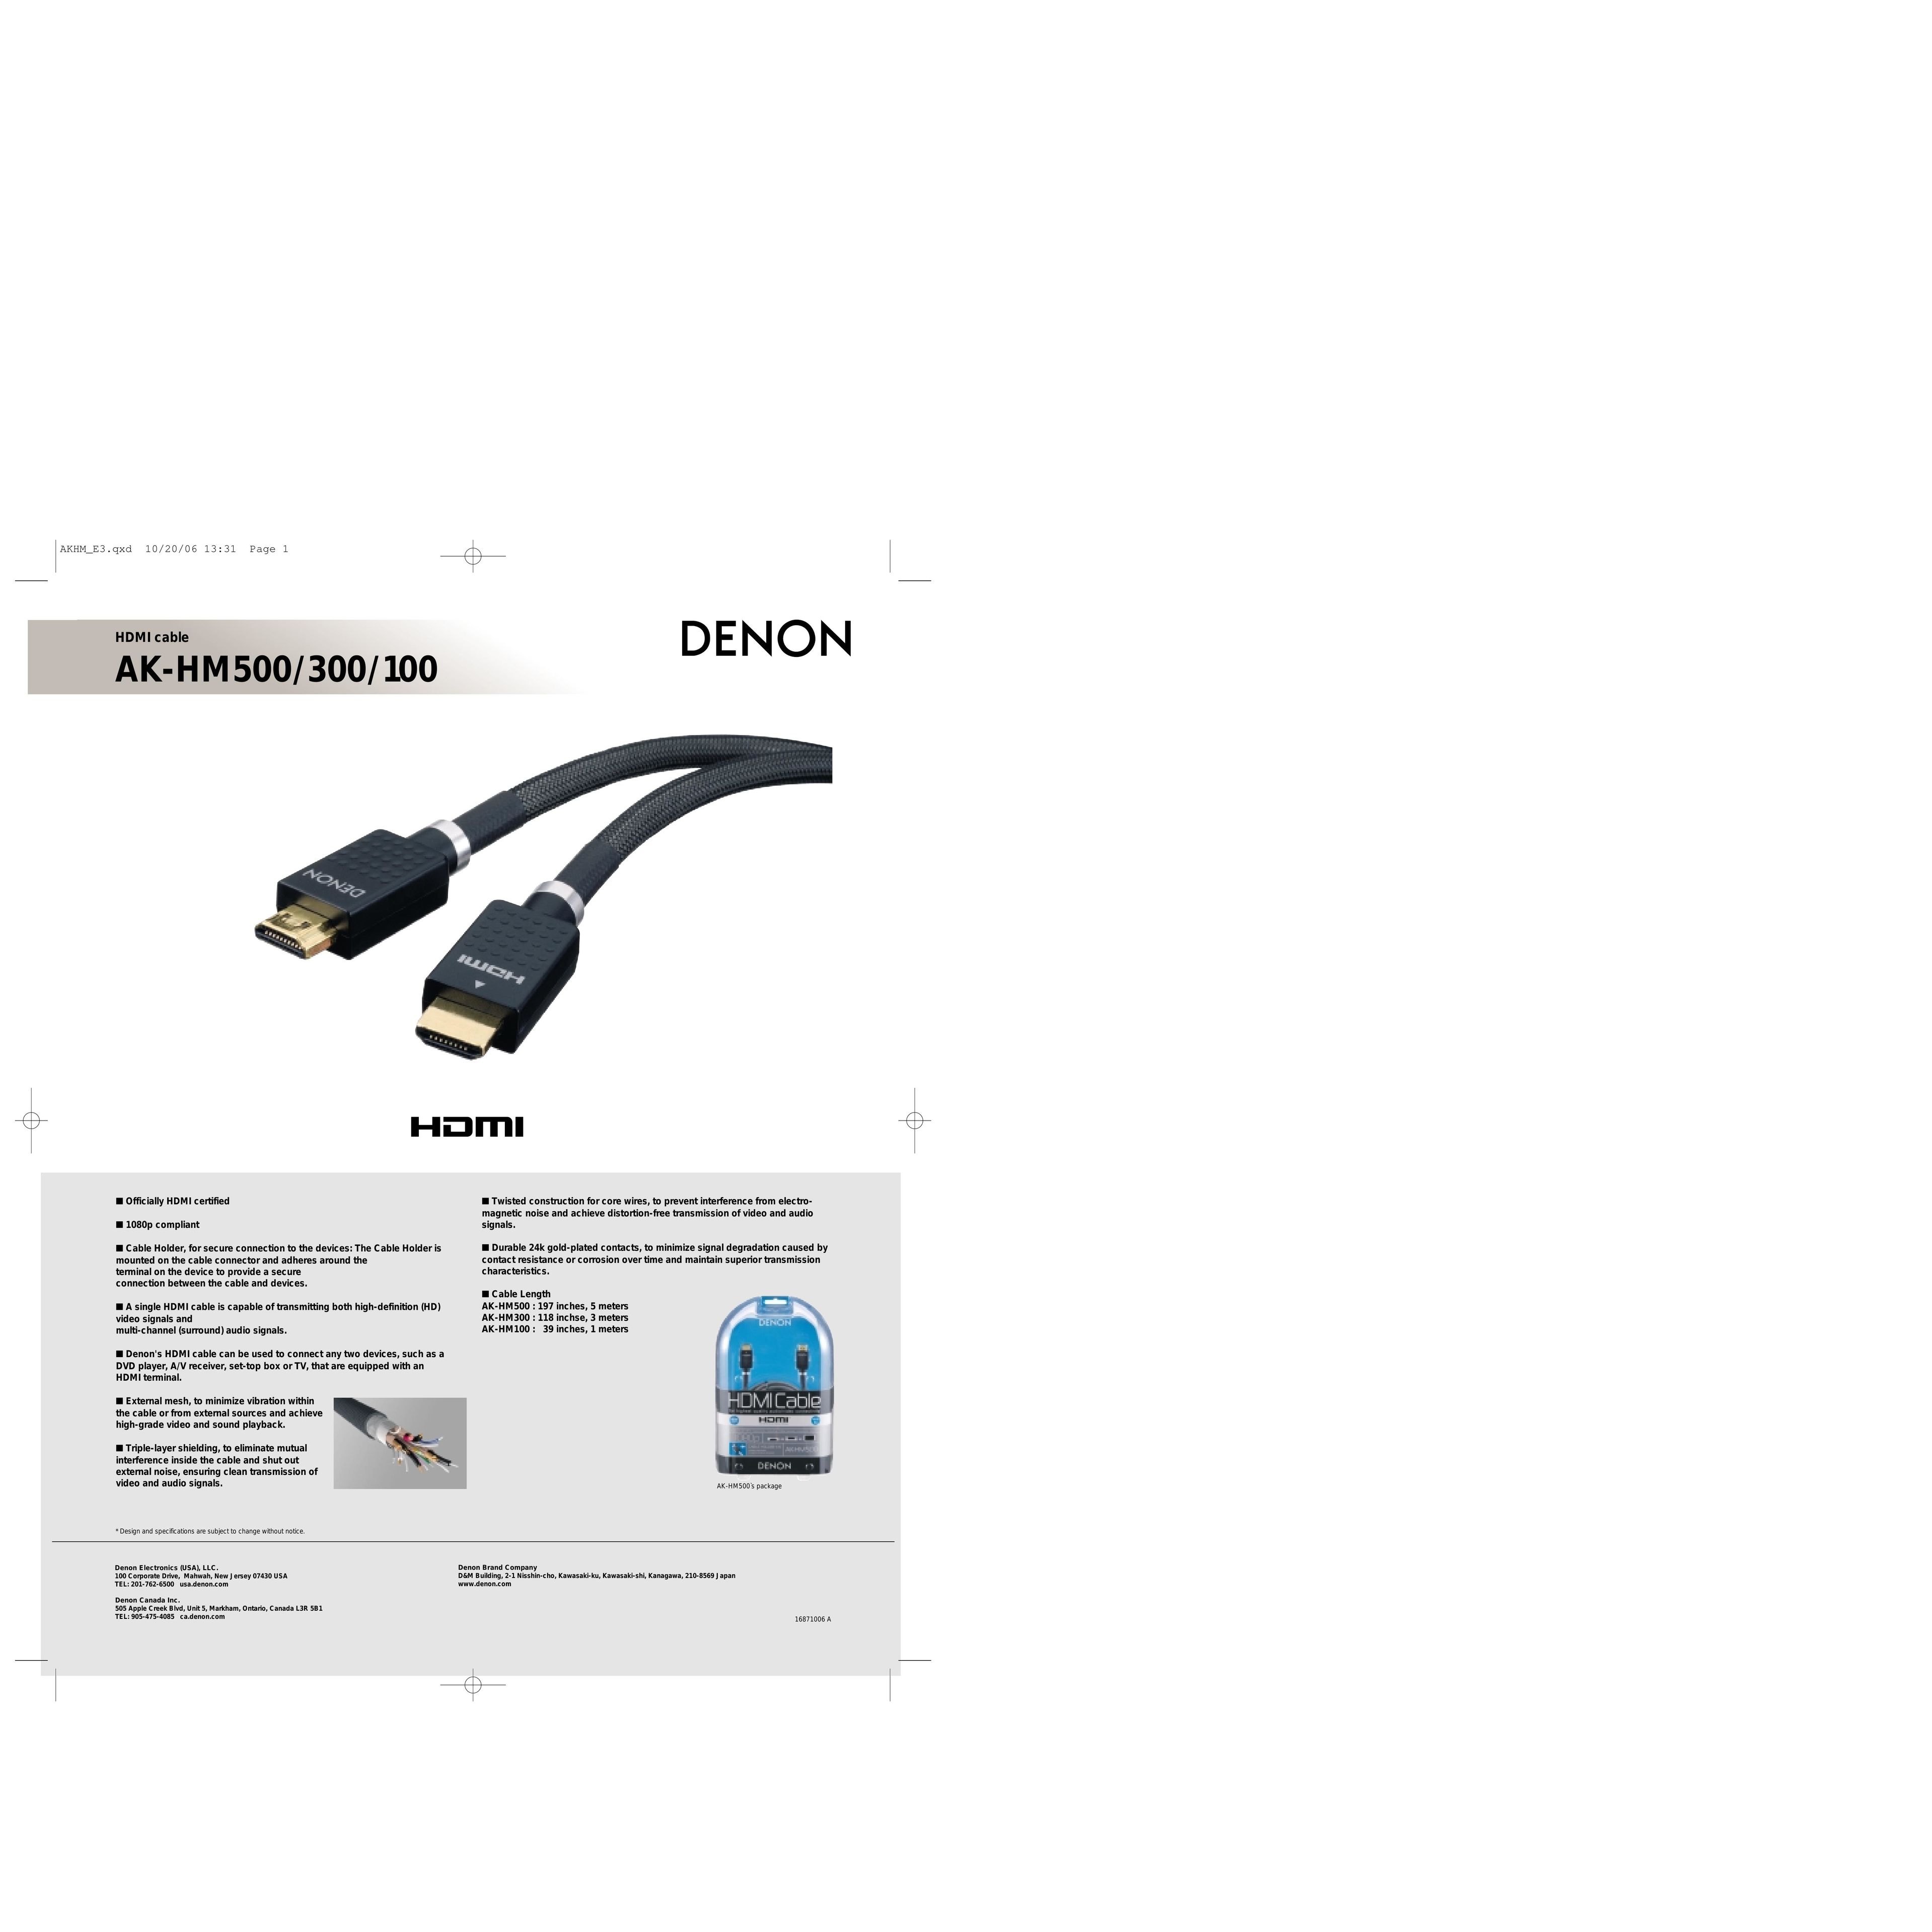 Denon AK-HM500/300/100 TV Cables User Manual